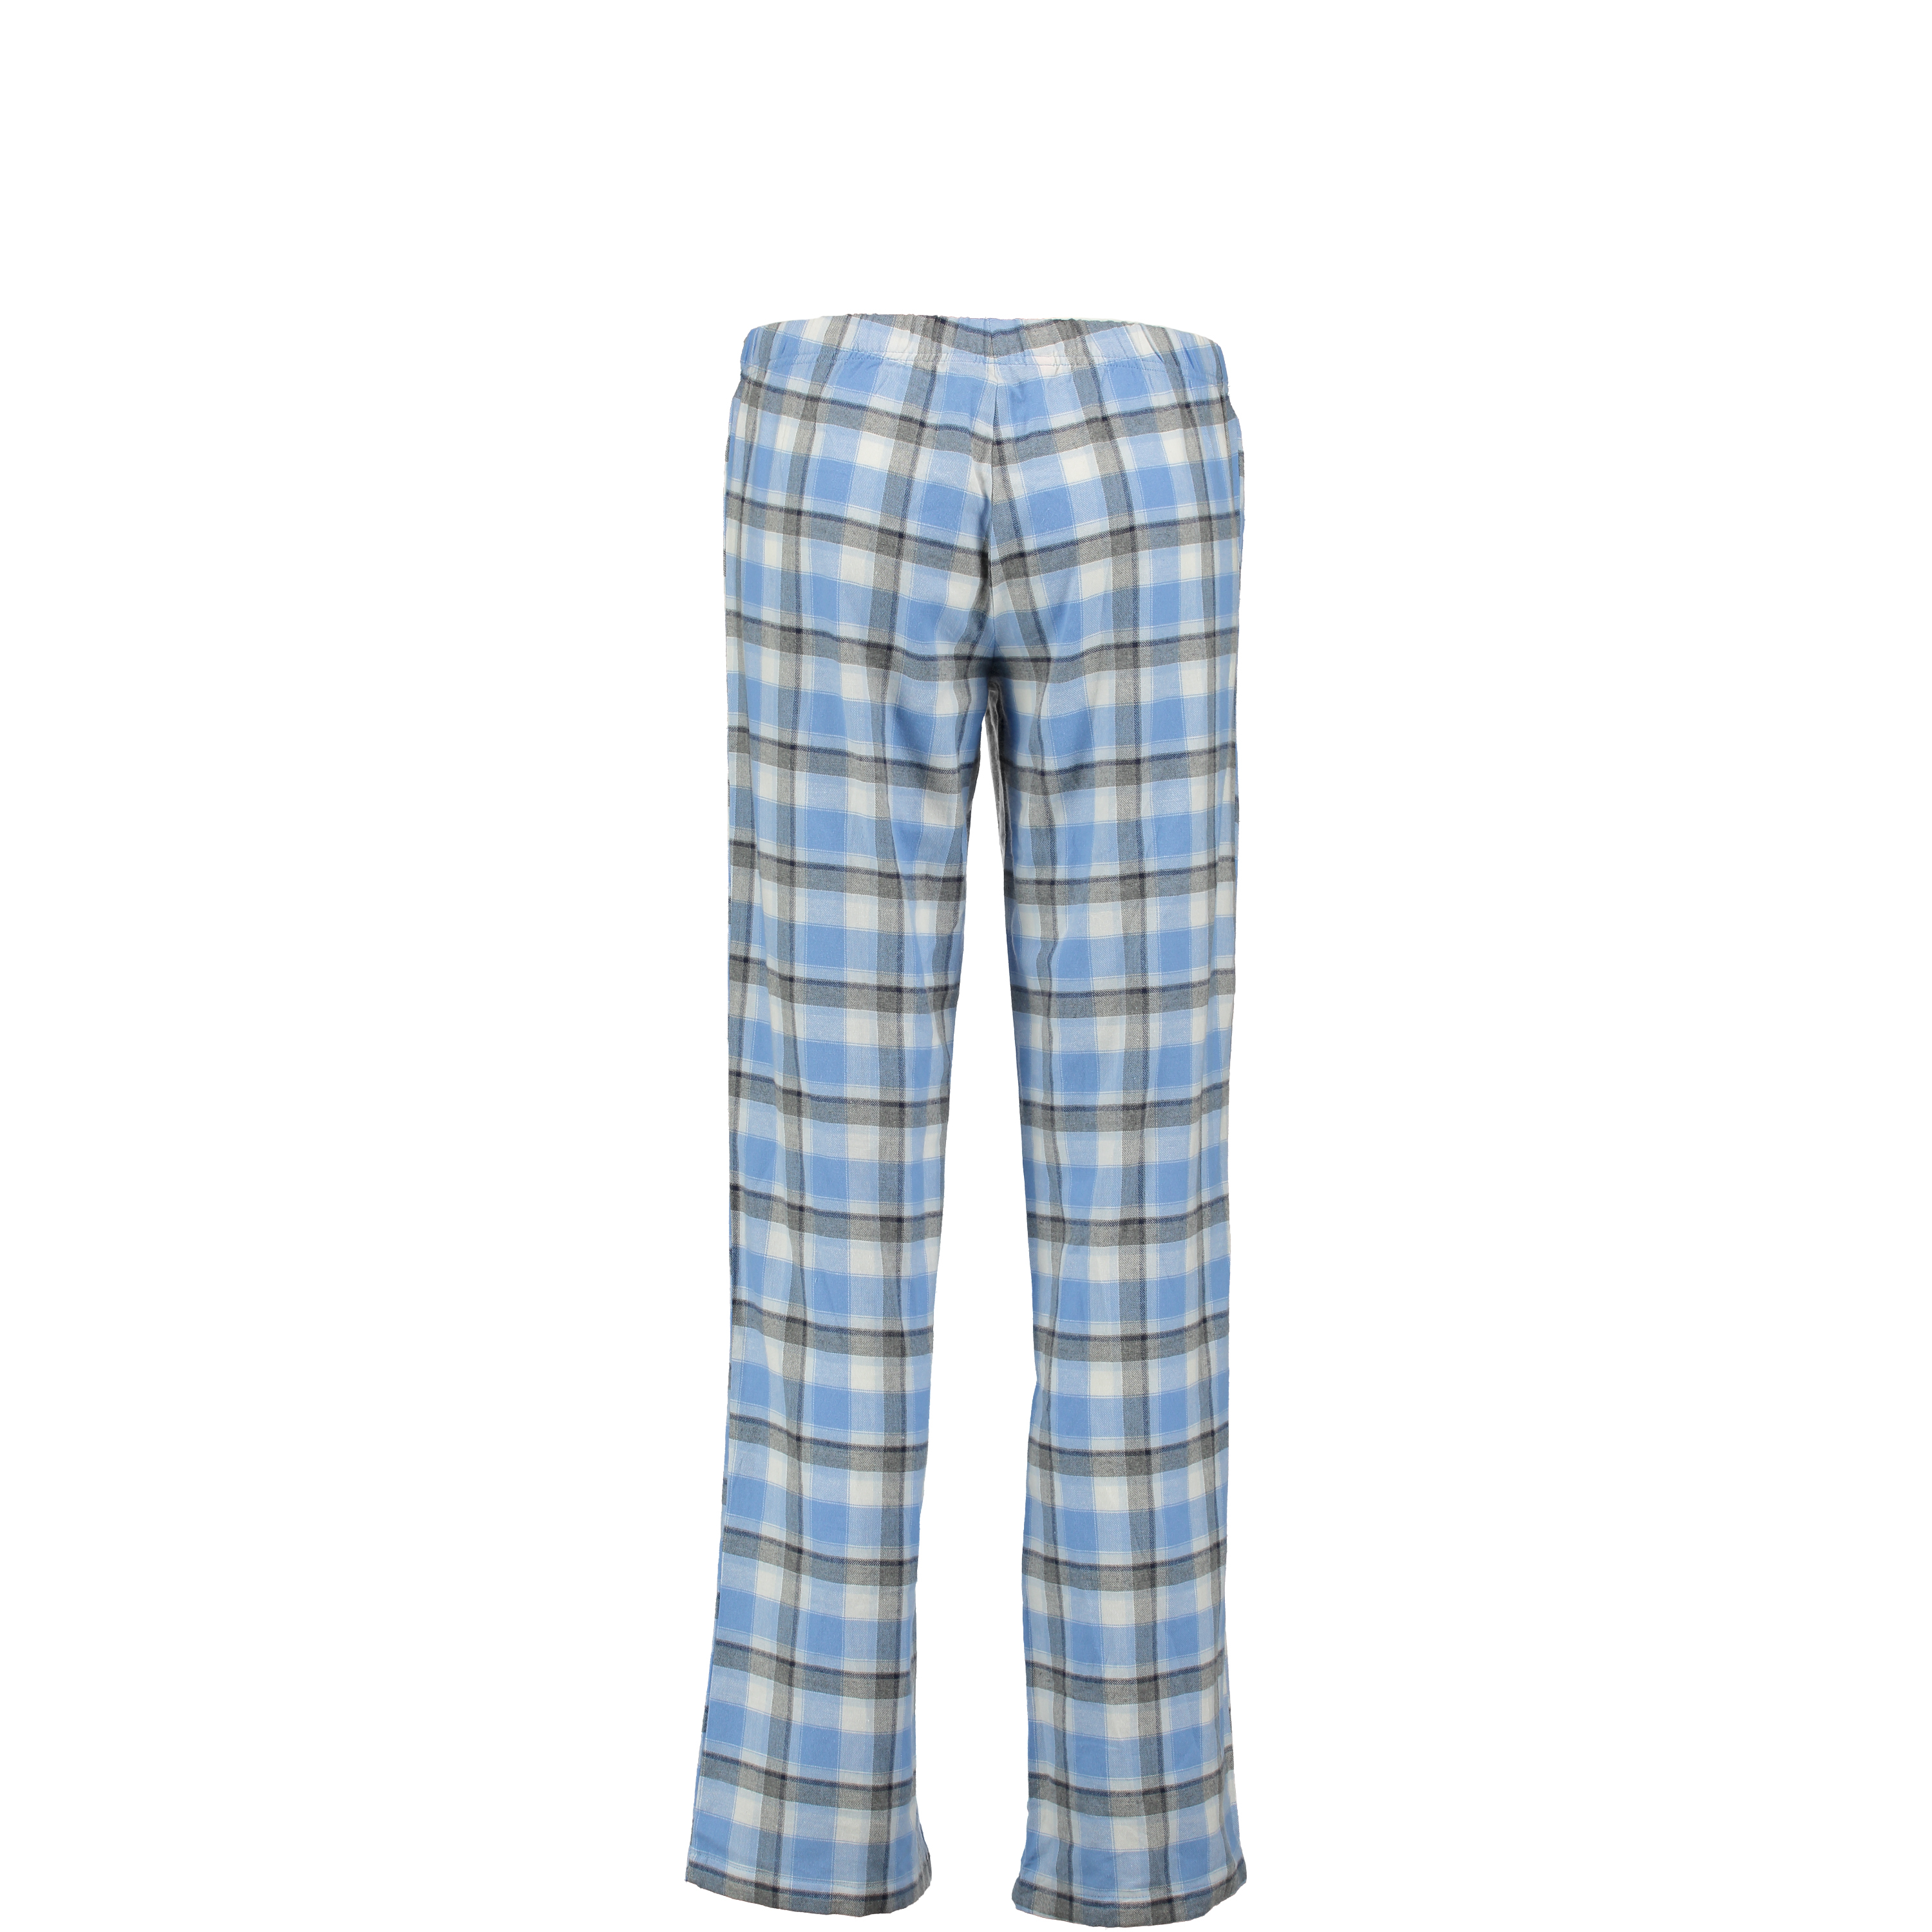 Pyjama pants Papillon butterfly, Azul, main